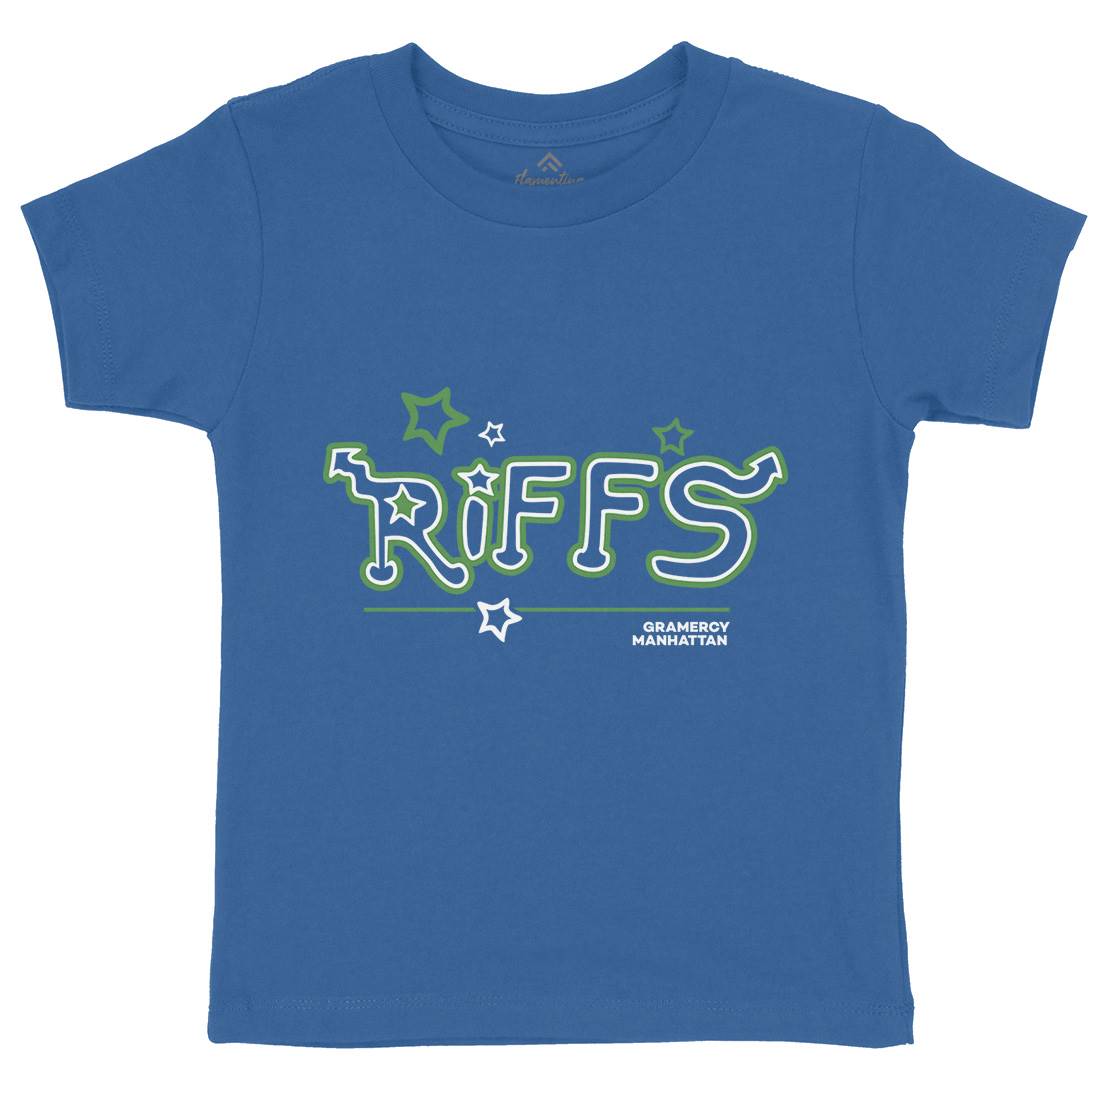 Riffs Kids Crew Neck T-Shirt Retro D290